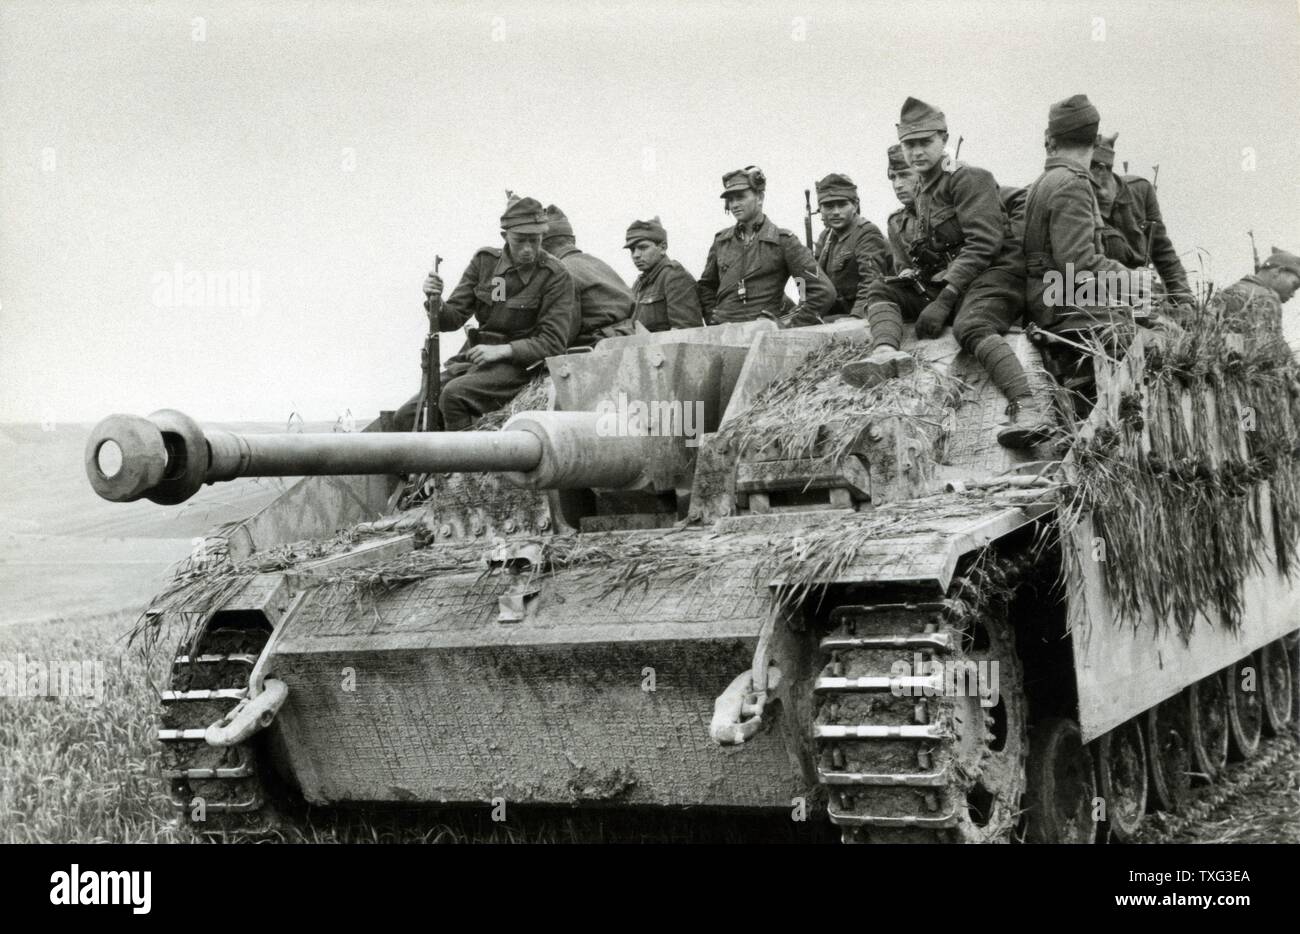 The Sturmgeschütz III (StuG III) assault gun used by the German army during the Second World War. 1943 Stock Photo